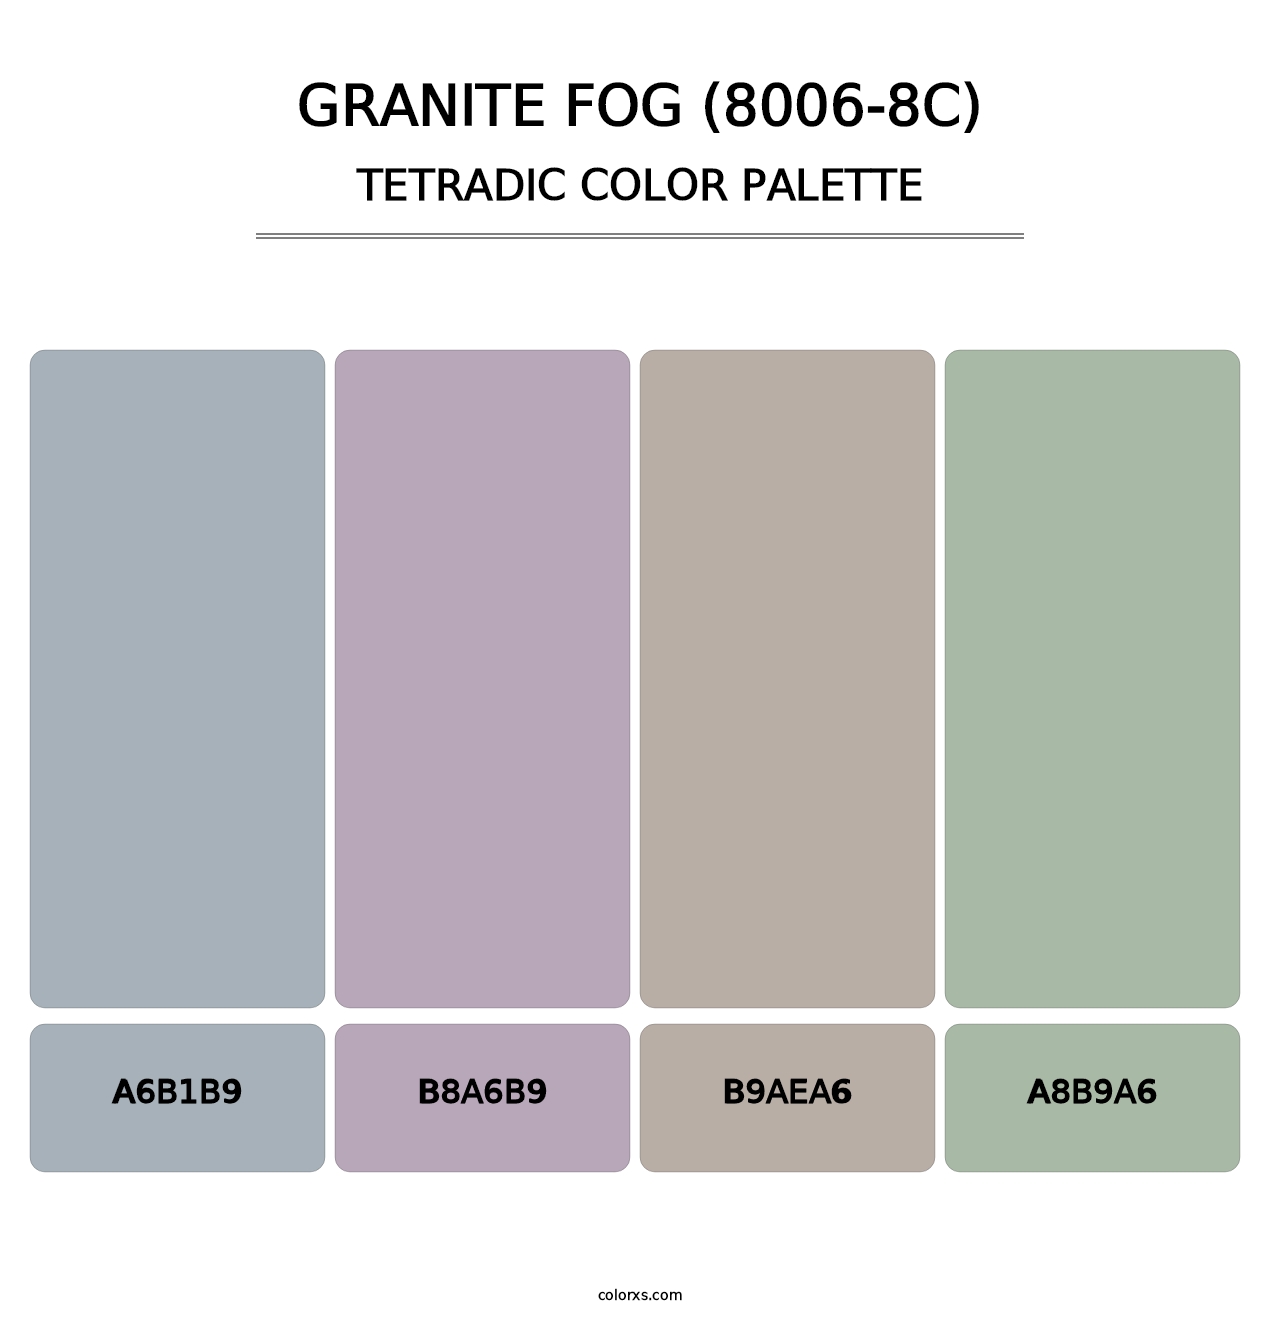 Granite Fog (8006-8C) - Tetradic Color Palette